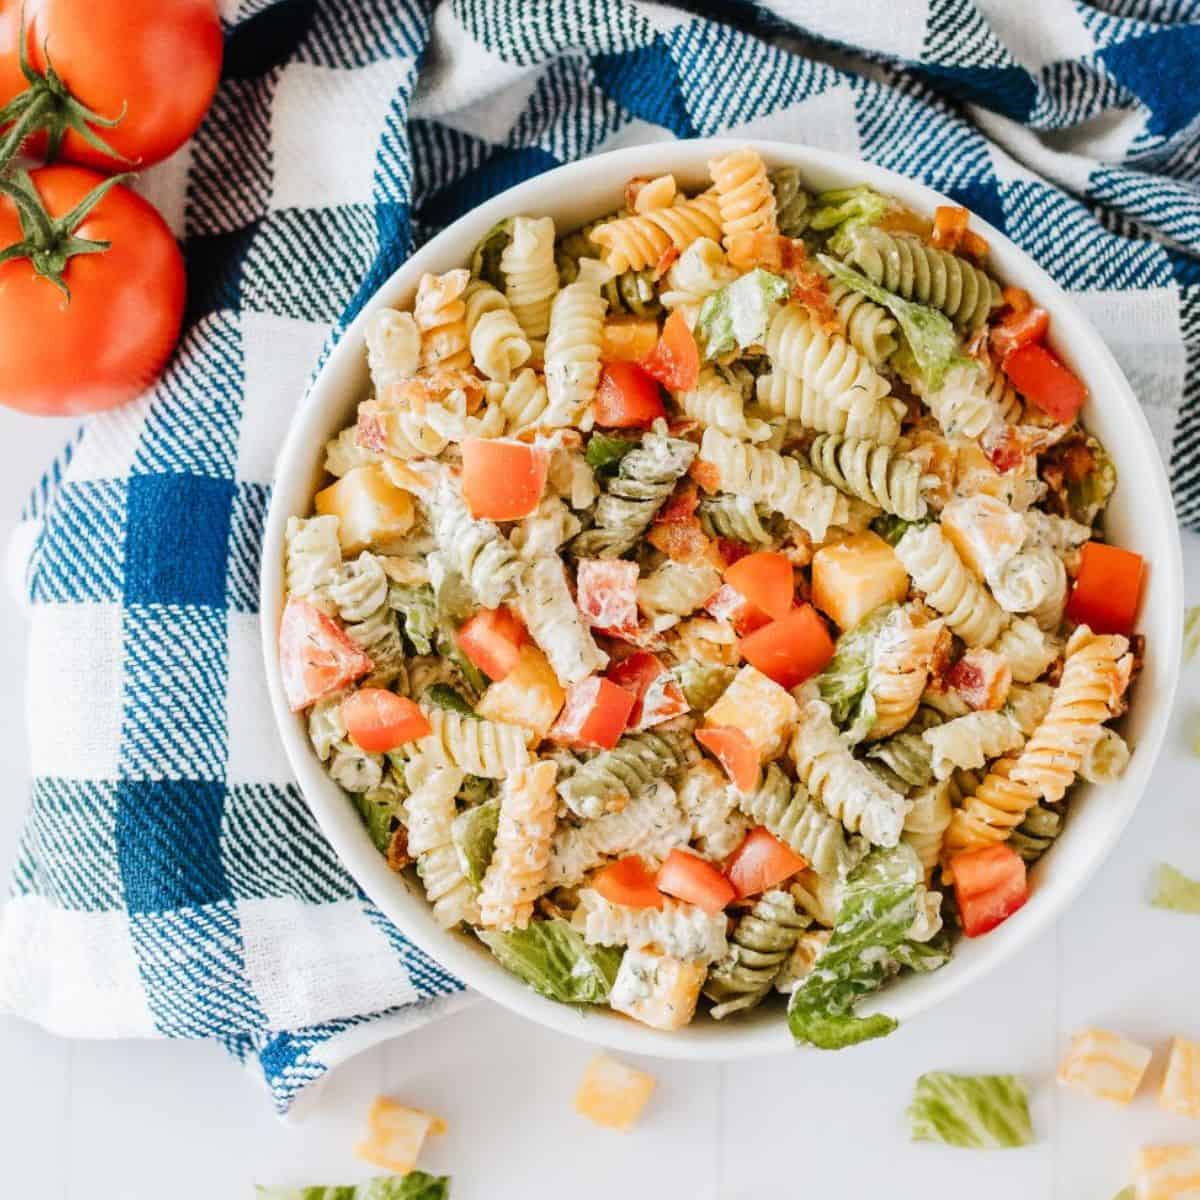 blt pasta salad for main image salads category